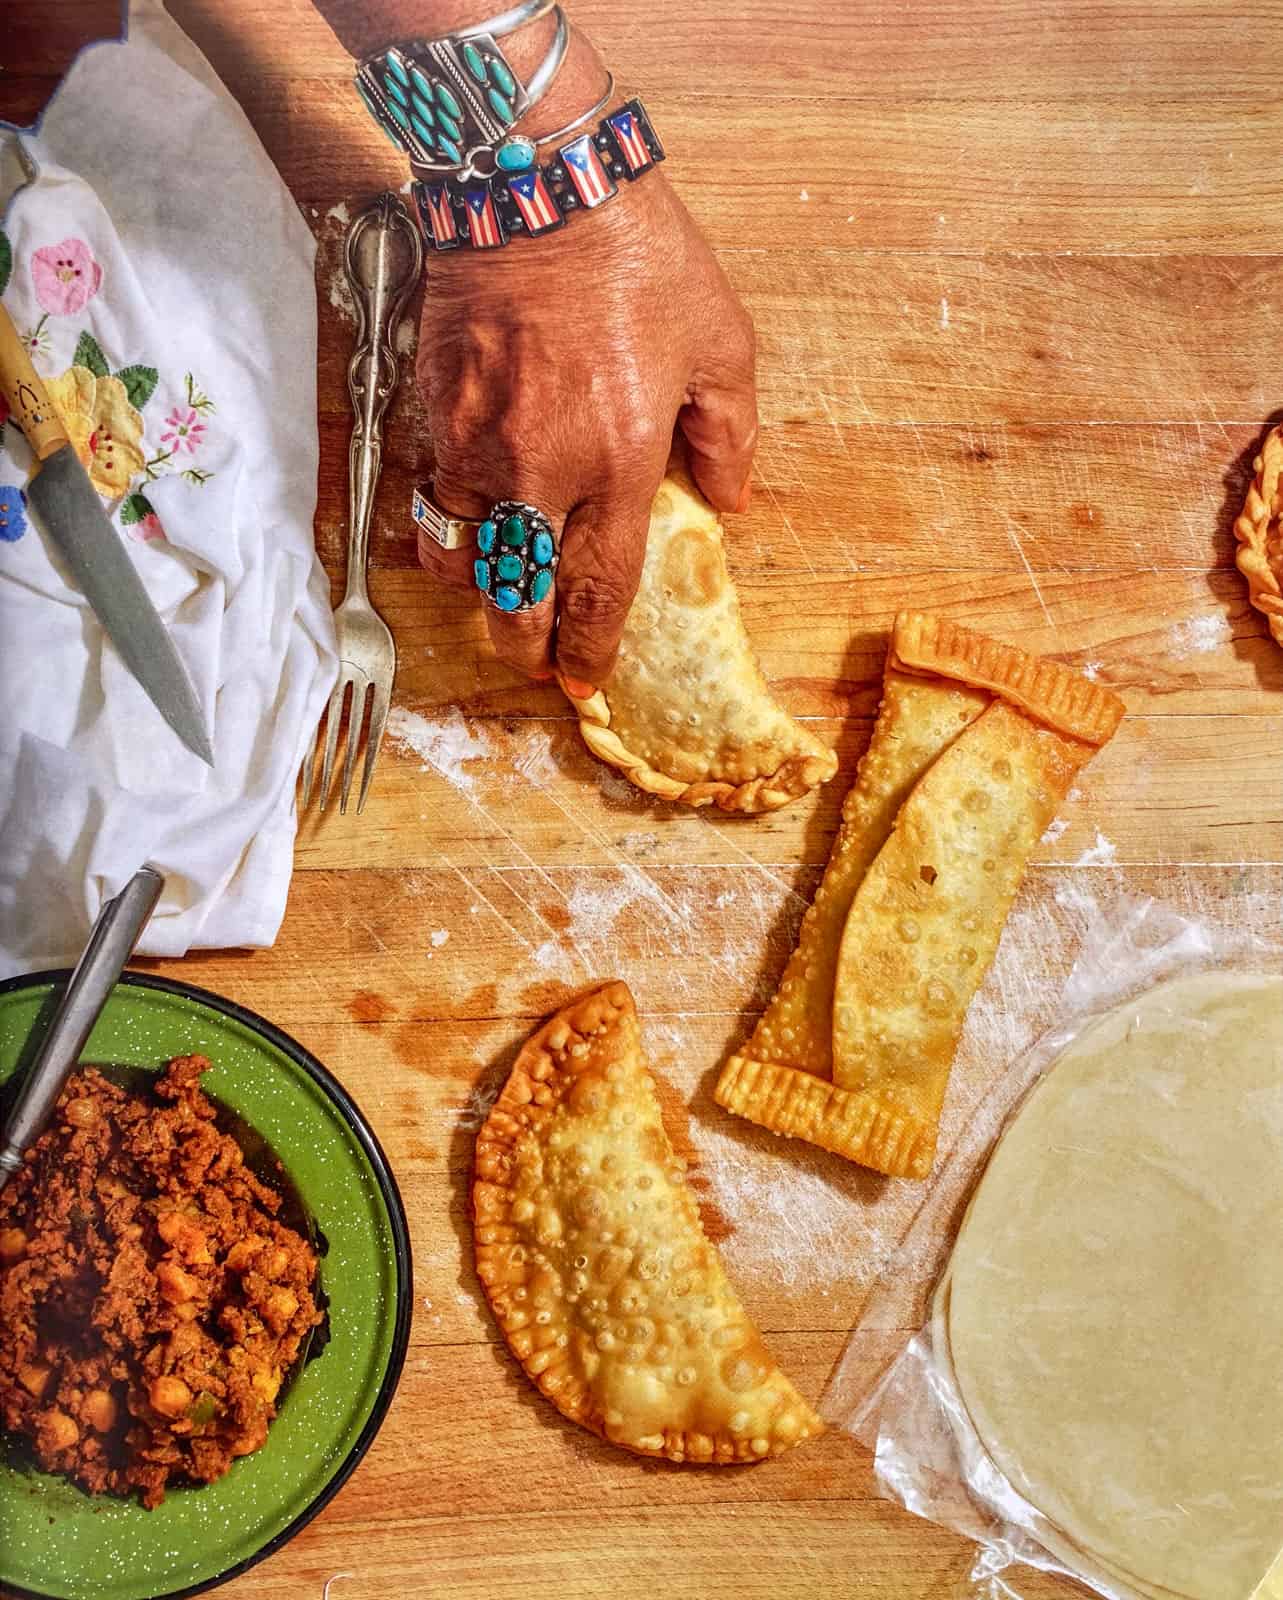 empanadillas and pastelillos image from Diasporican cookbook. Food photography by Dan Liberti